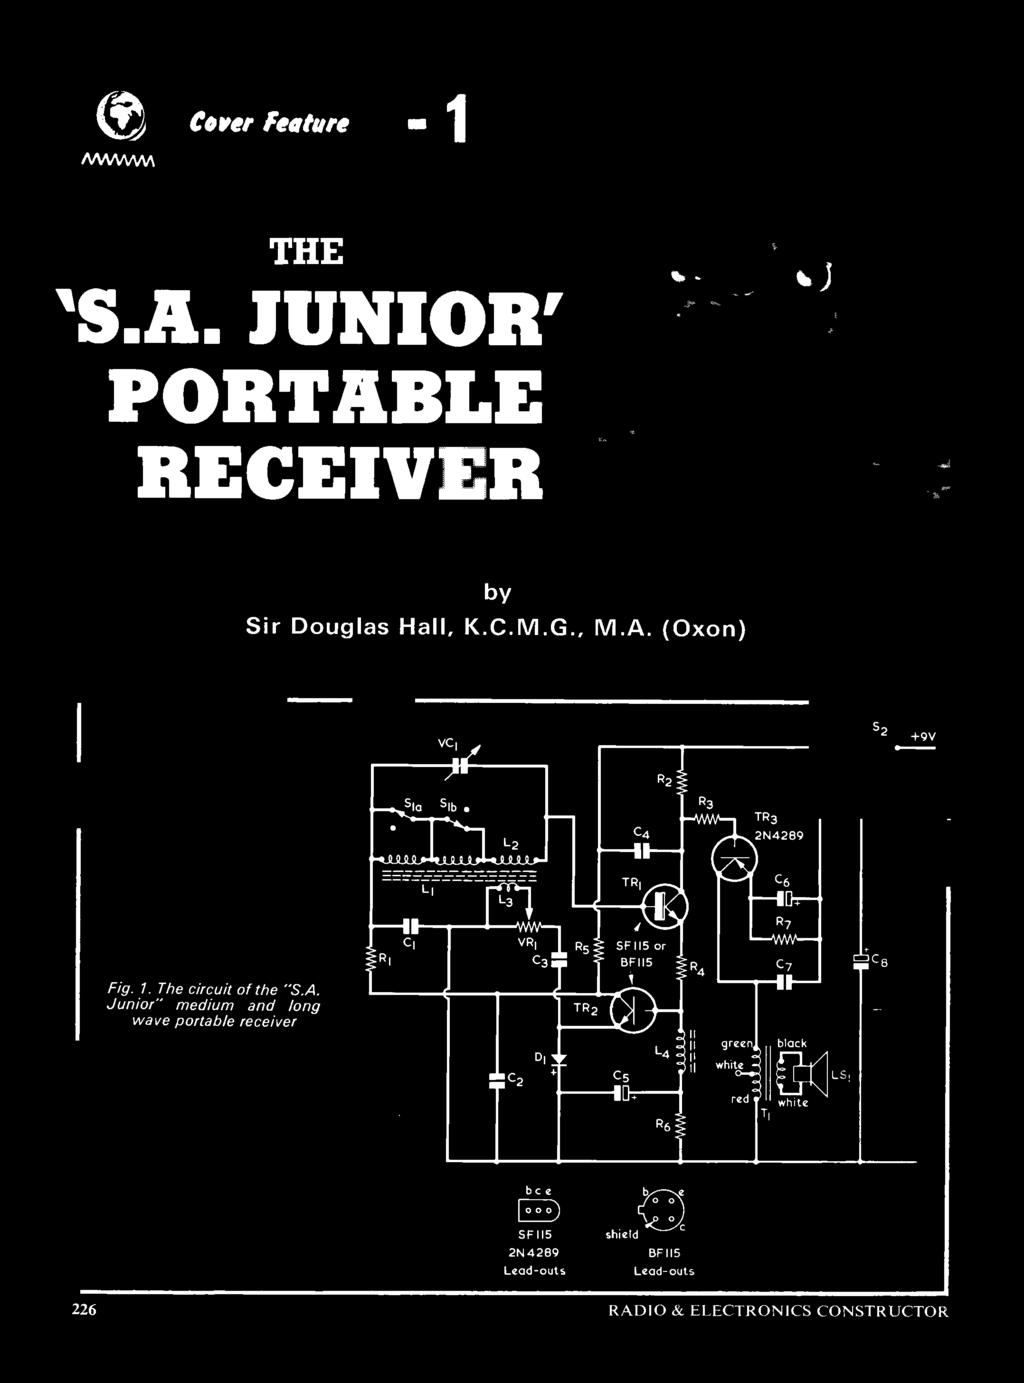 Junior" medium and long wave portable receiver R1 CI Li VR1 C3 R5 TR2 TRI SF 115 or BFIIS `A, C6 ---o---